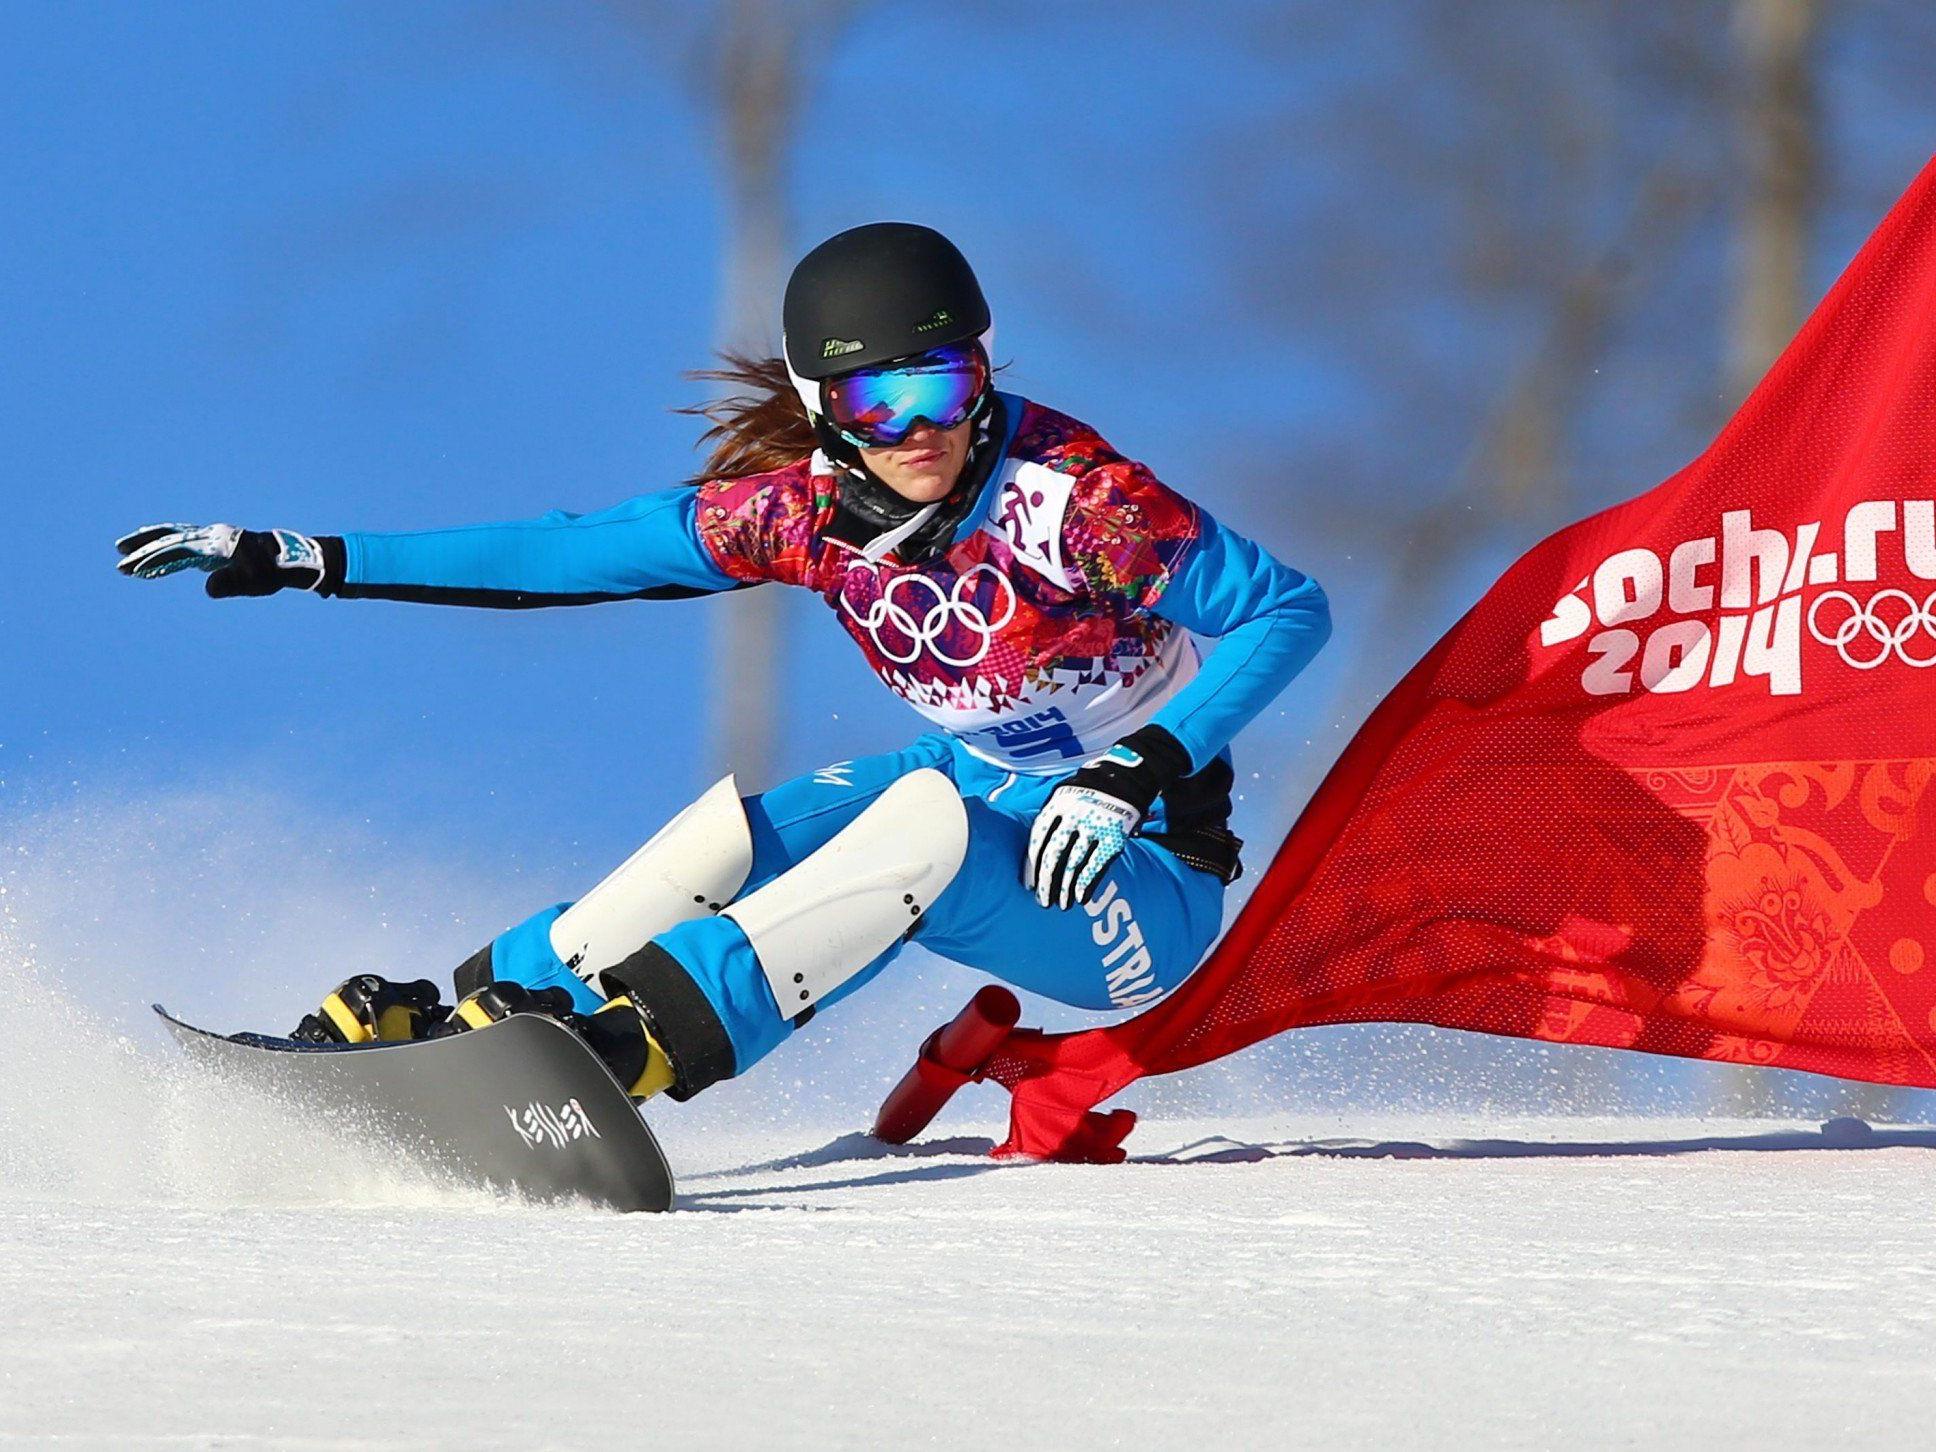 Snowboarderin Dujmovits holte Gold im Parallel-Slalom.